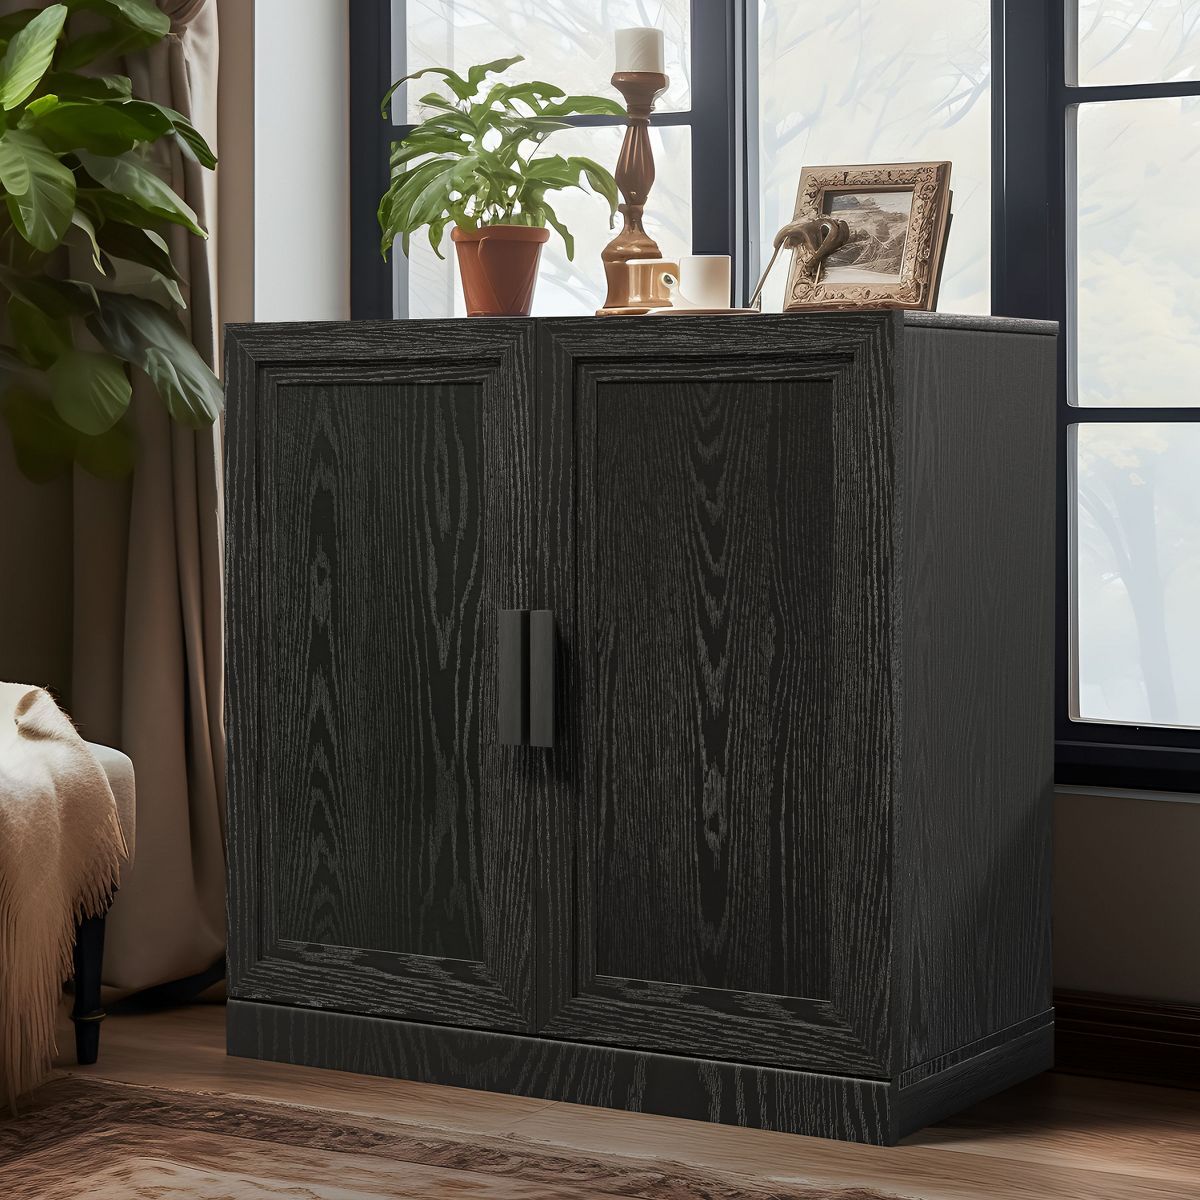 Neutypechic Wood Grain Decorative Bookshelf with Doors and Adjustable Partitions | Target